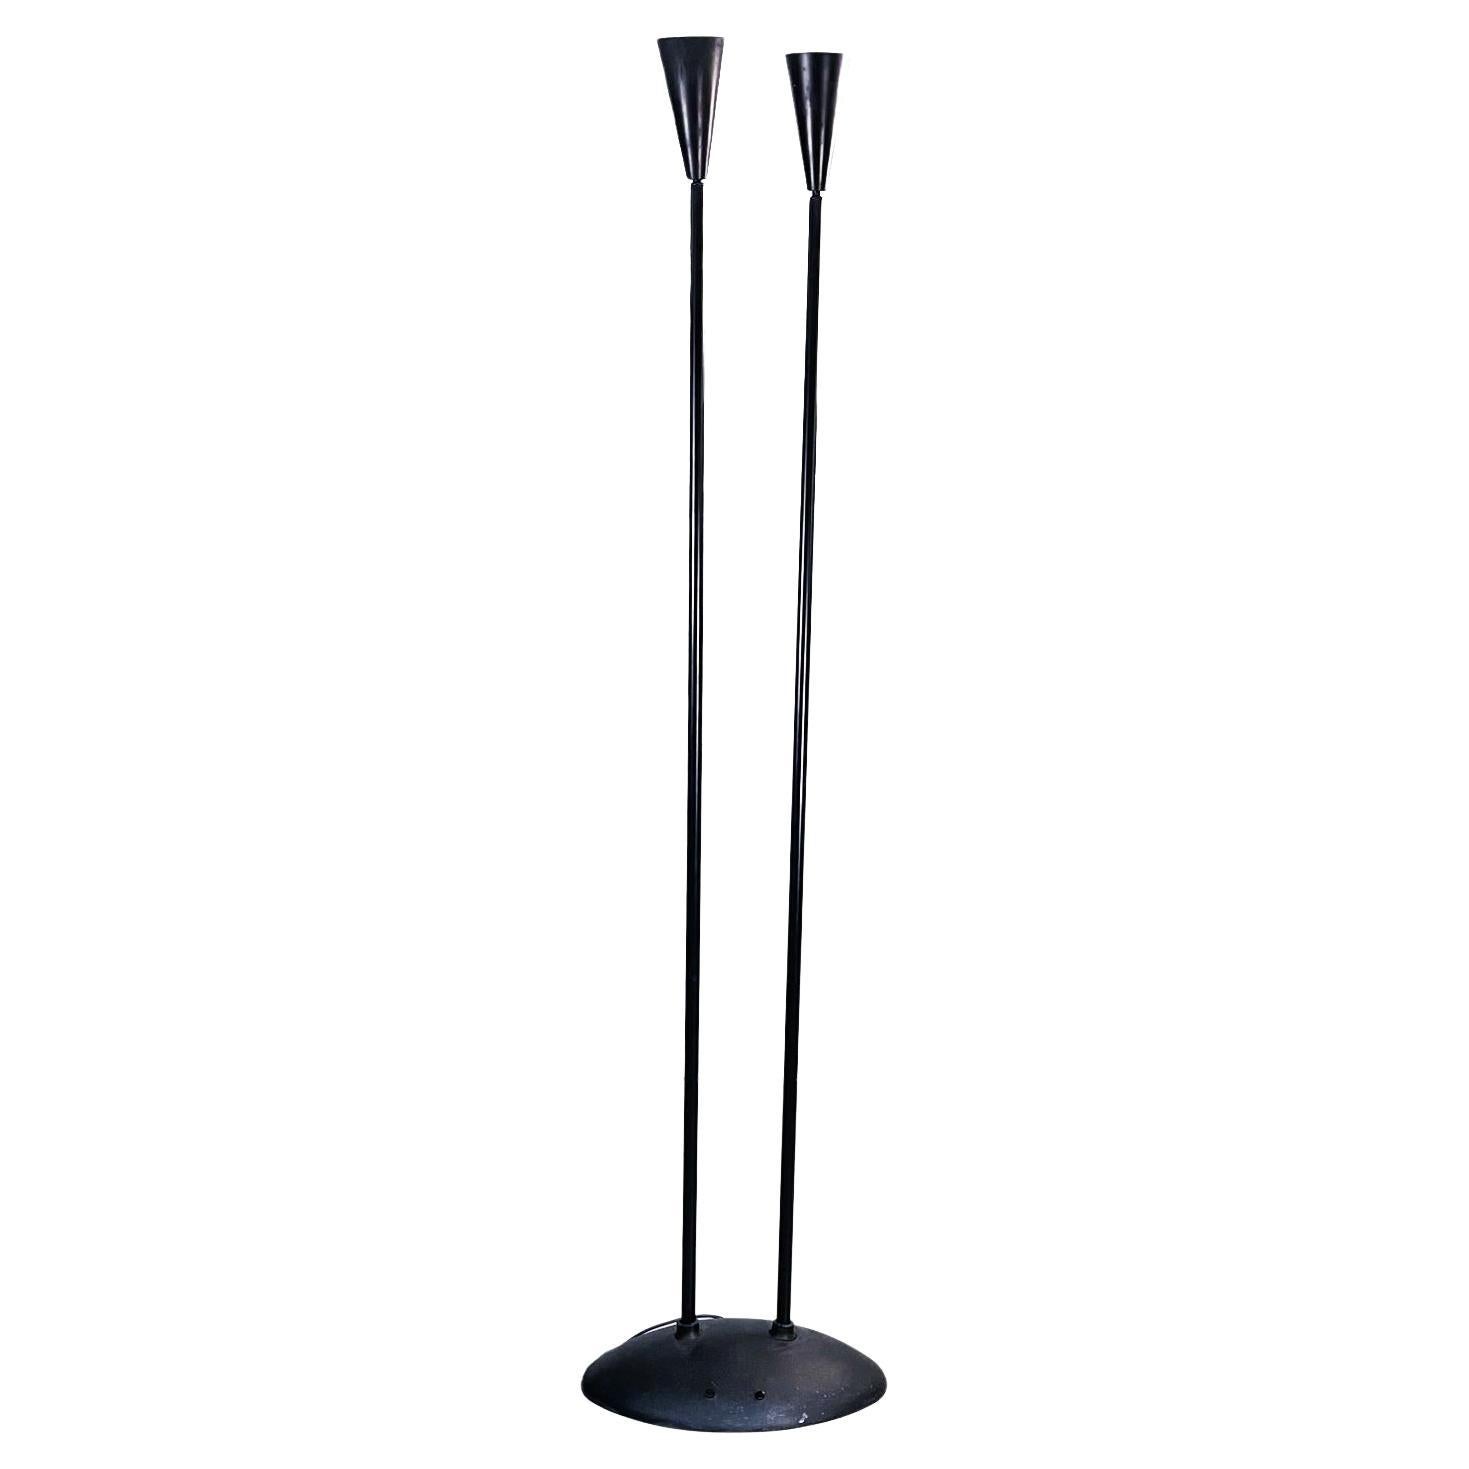 Italian Modern Floor Lamp Whit Two Light Adjustable in Black Metal, 1990s For Sale